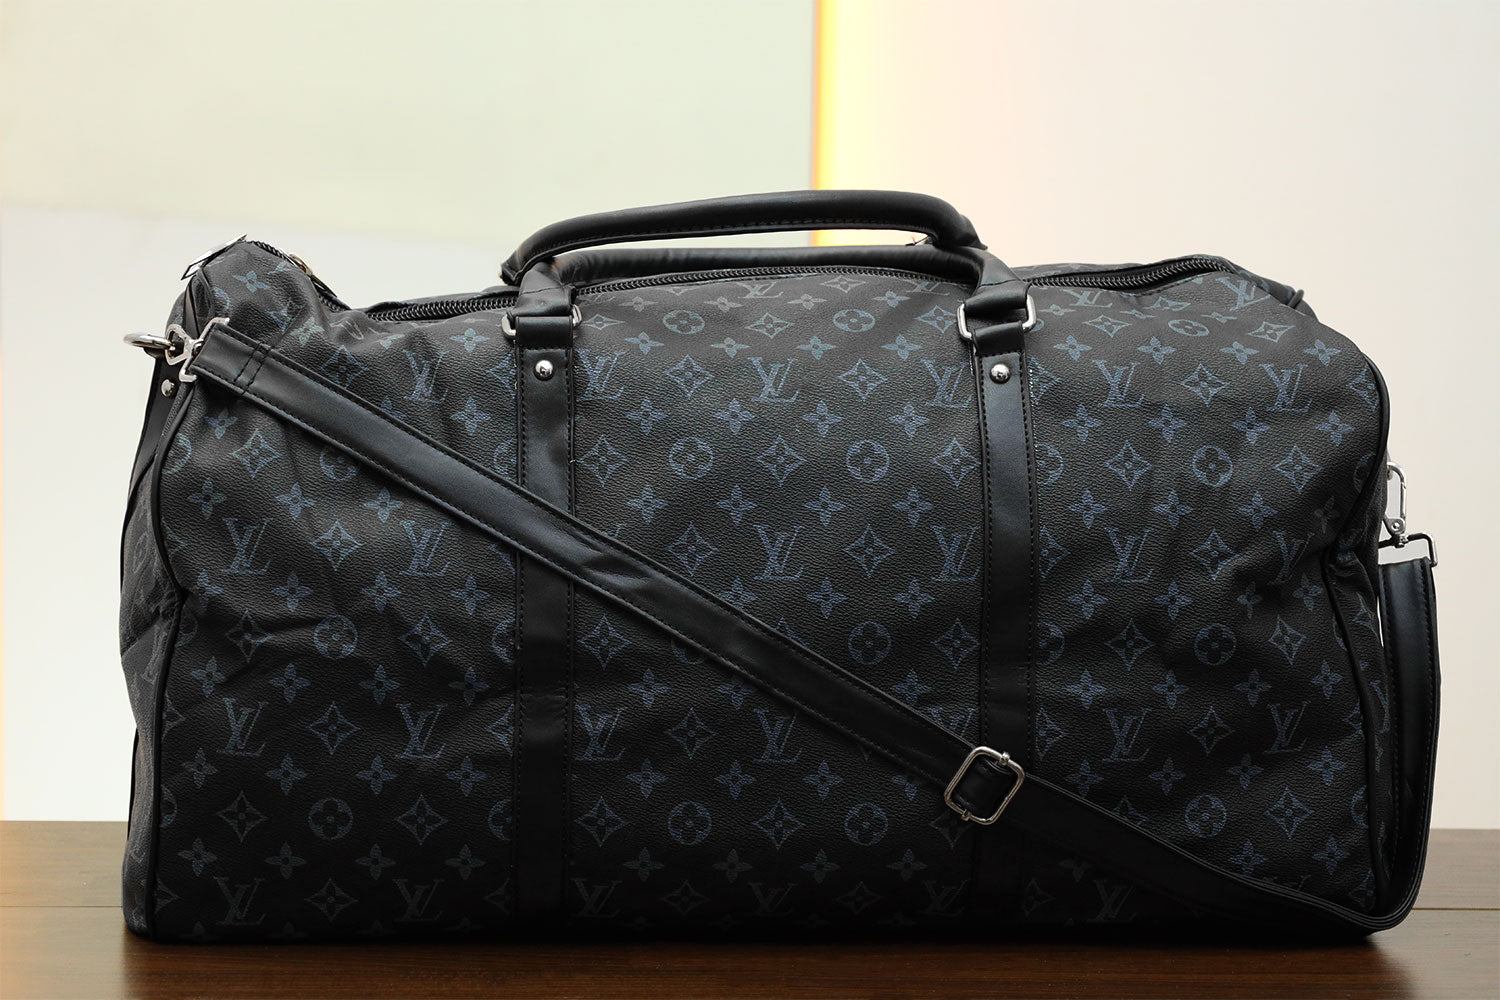 Luis Vten Imported All Over Print Travel bag in Black & Grey